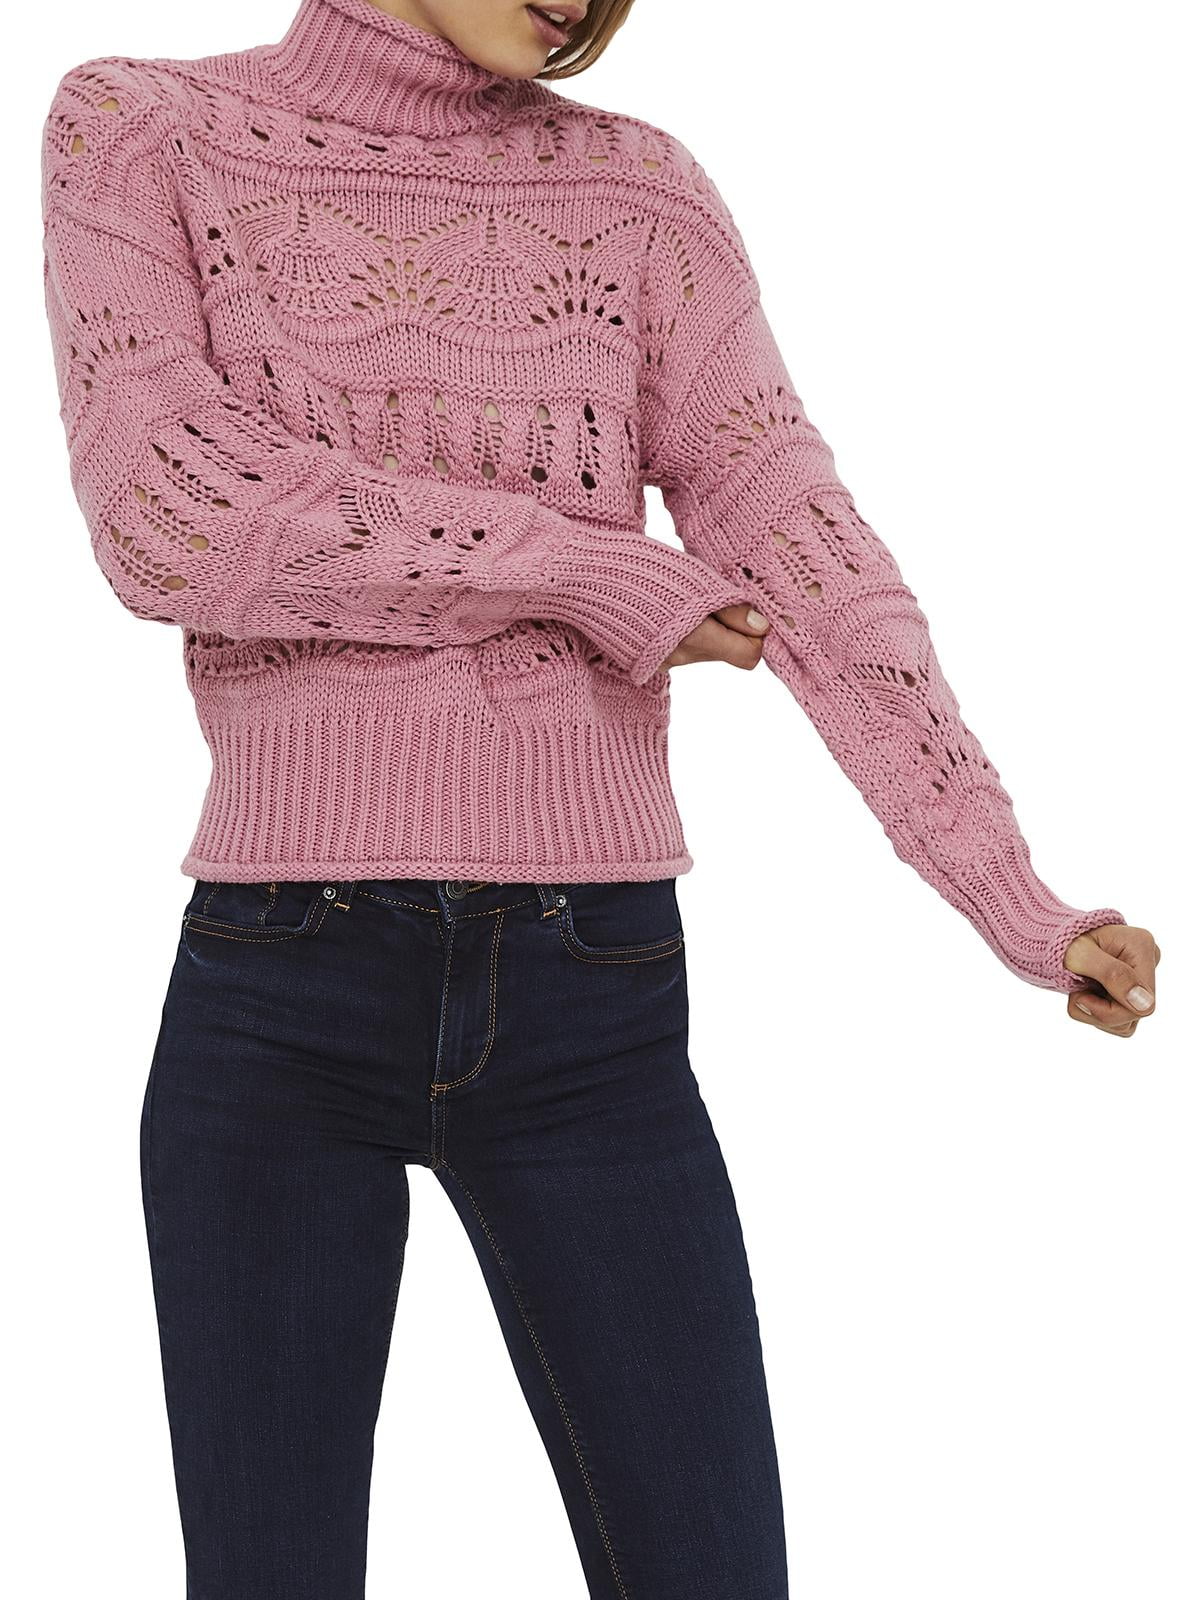 Moda Womens Poll Highneck Blouse Pullover Sweater Pink - Walmart.com